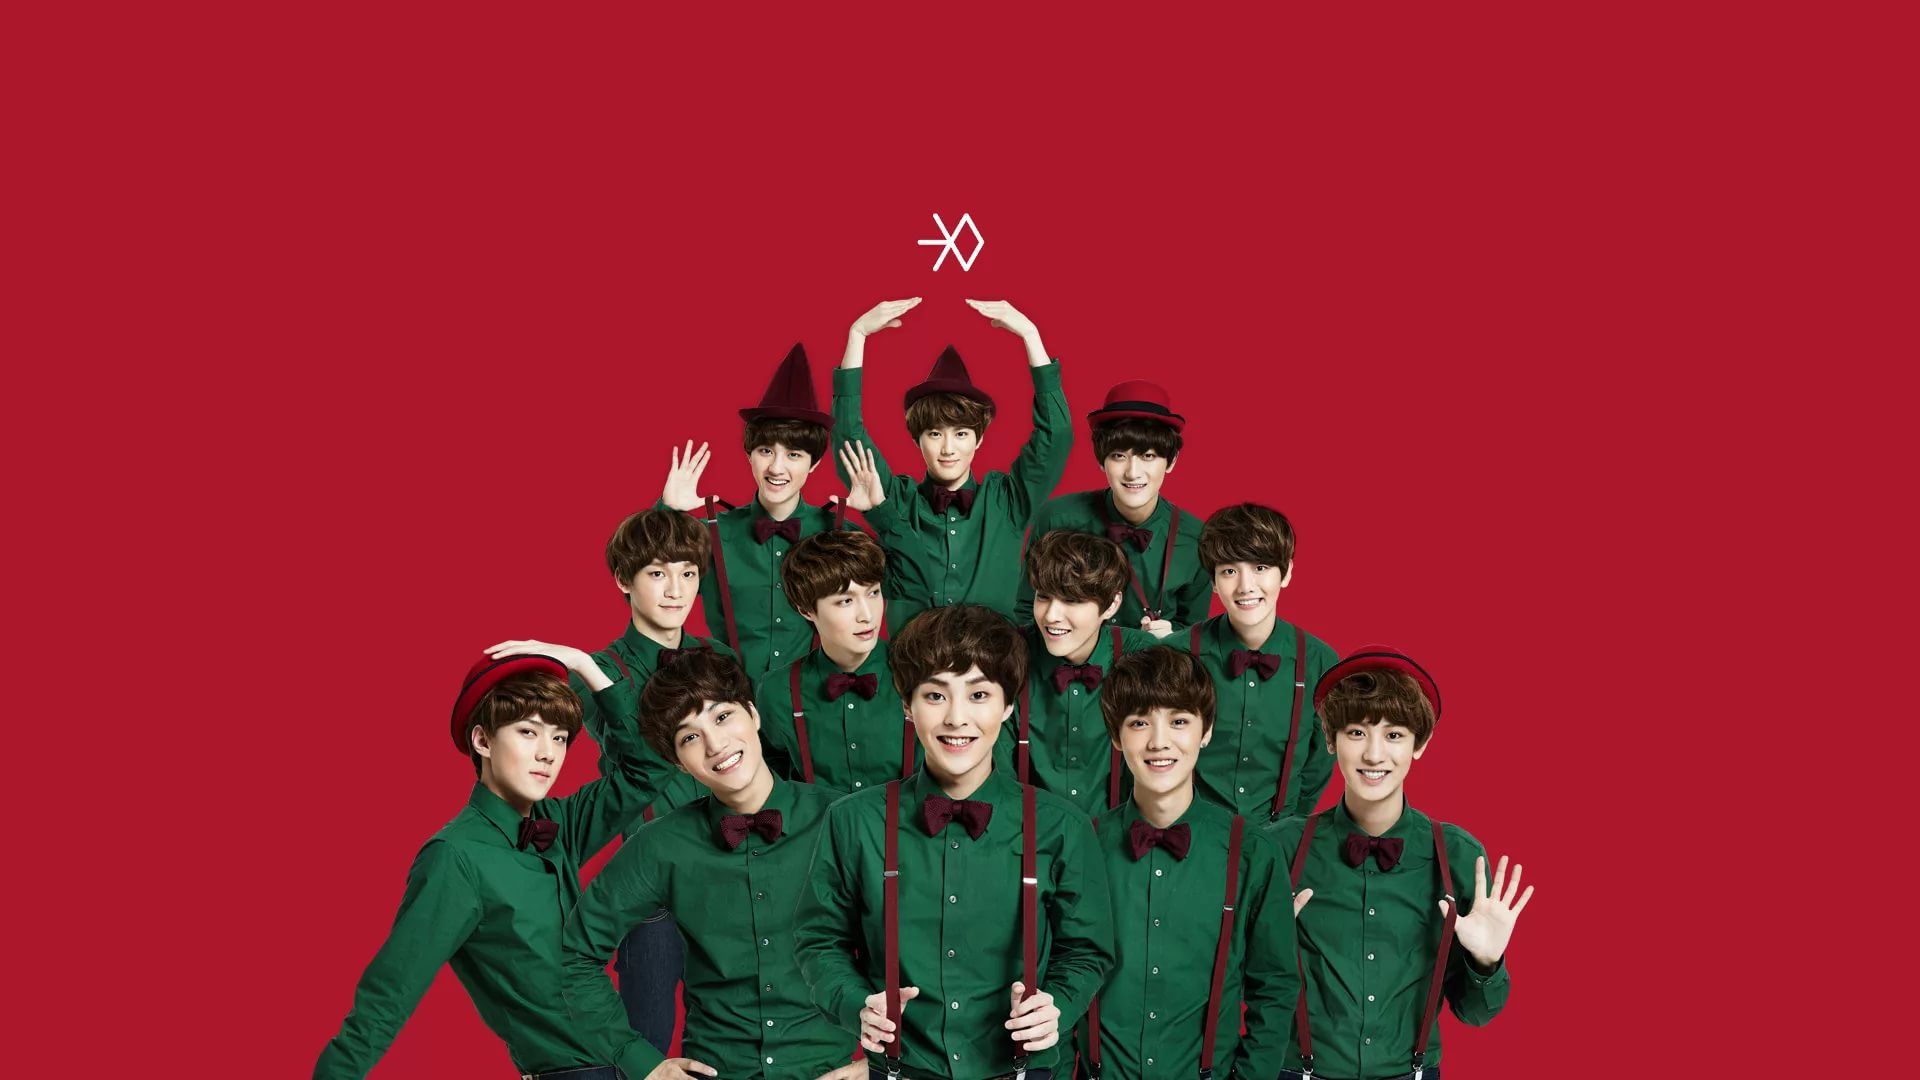 exo wallpaper,red,social group,green,team,event